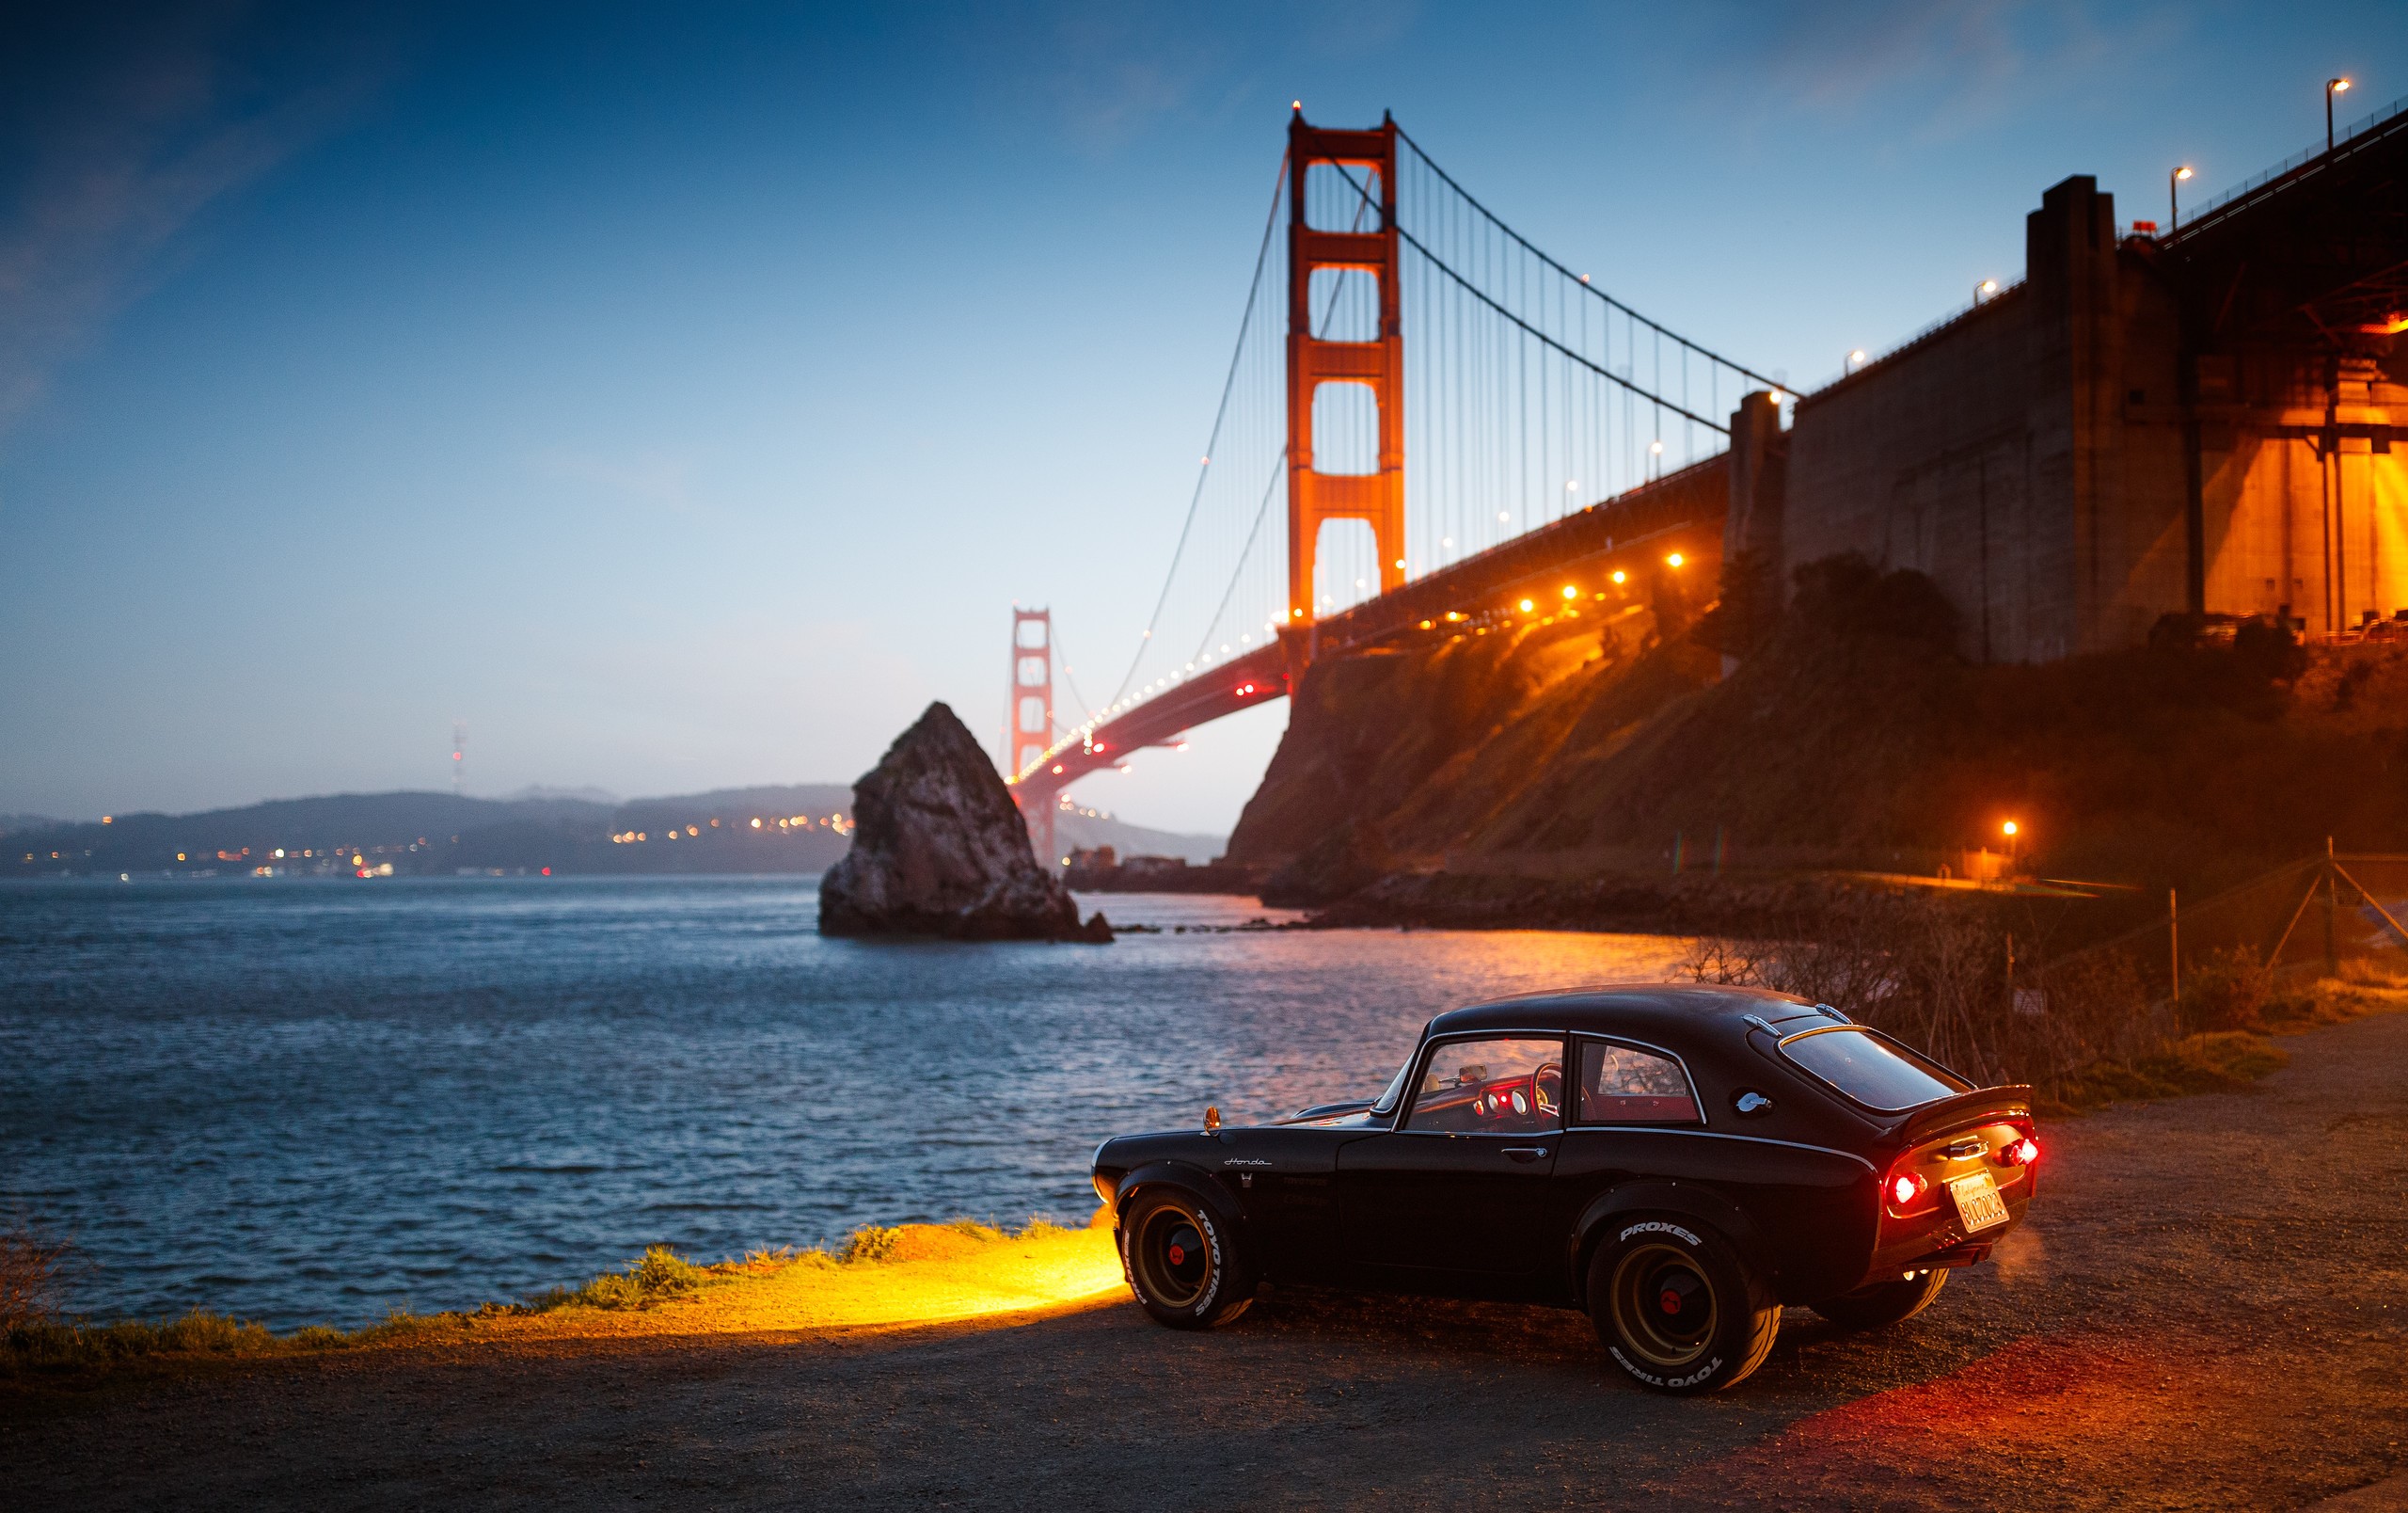 Honda S800 Honda Classic Car JDM Japanese Cars Sports Car San Francisco Golden Gate Bridge Evening L 2560x1608